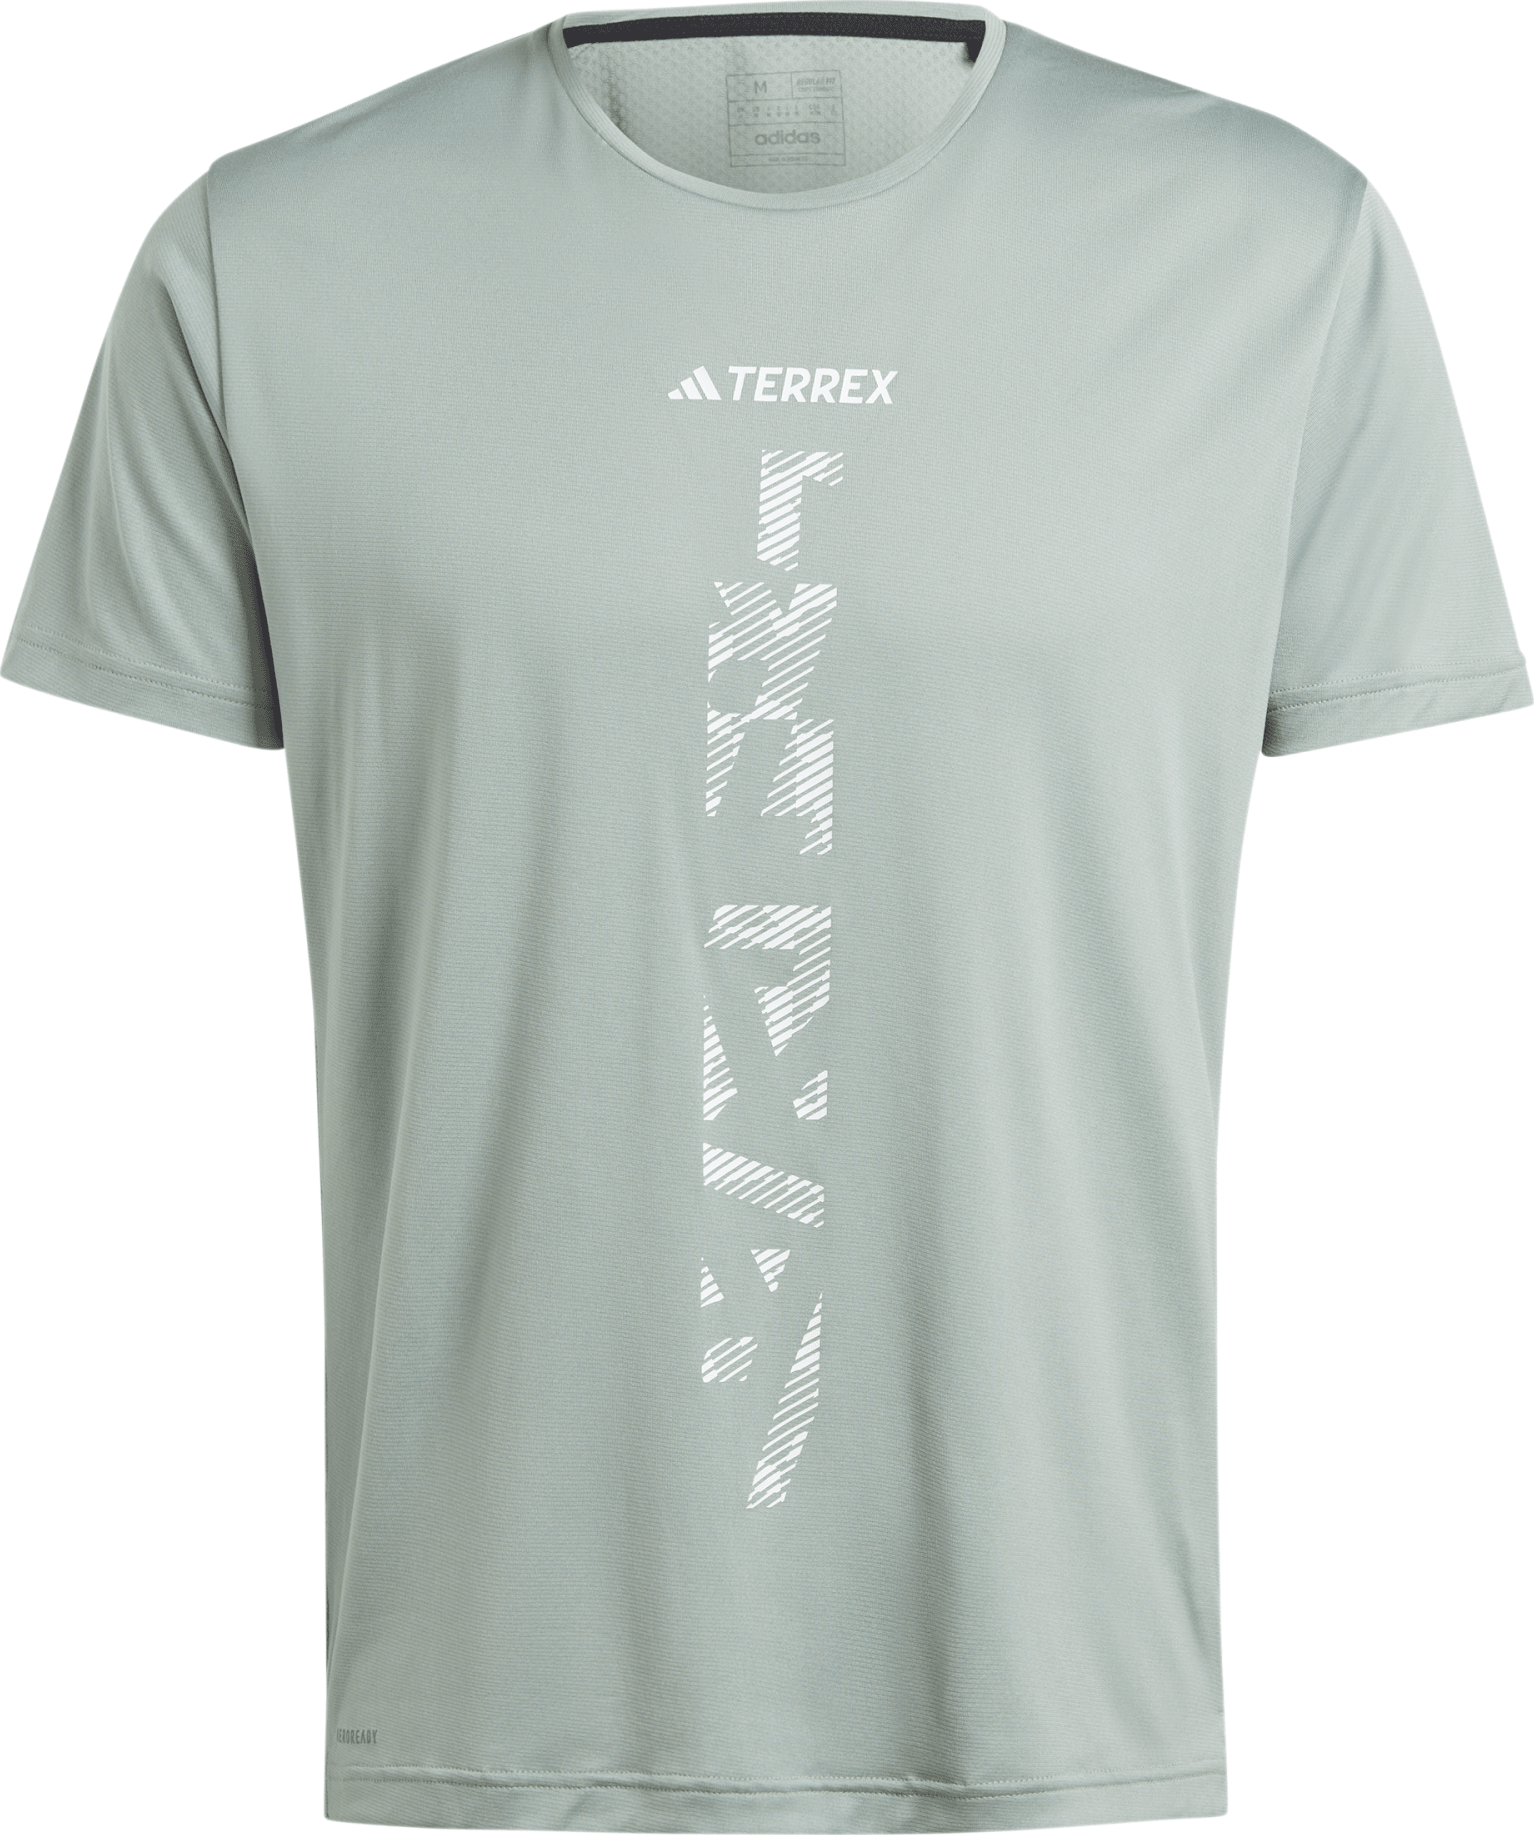 Adidas Men's Terrex Agravic Trail Running T-Shirt Silver Green